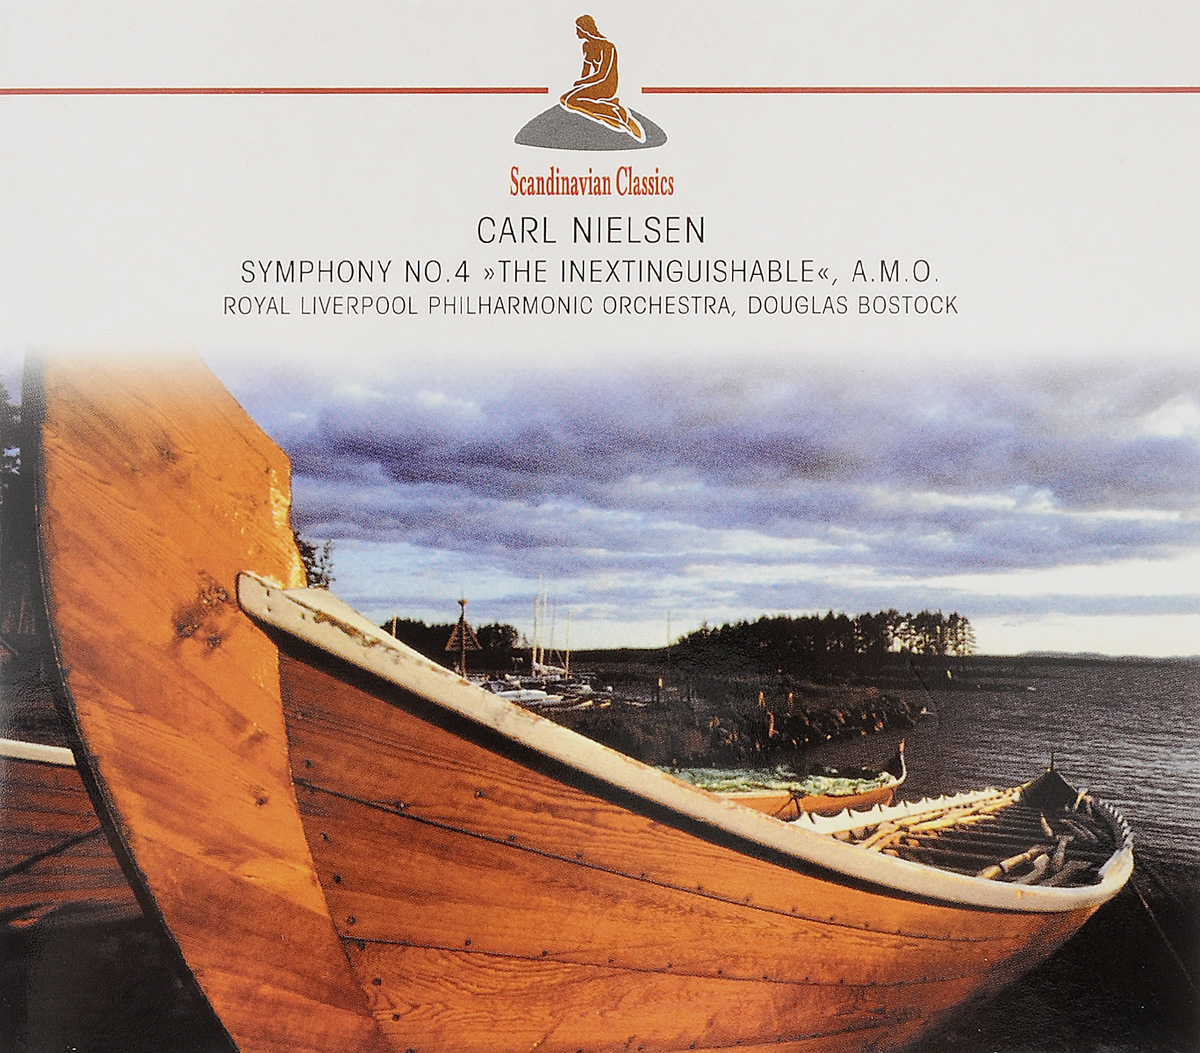 Scandinavian Classics. Royal Liverpool Philharmonic Orchestra, Douglas Bostock. Nielsen. Sinfonie No.4 